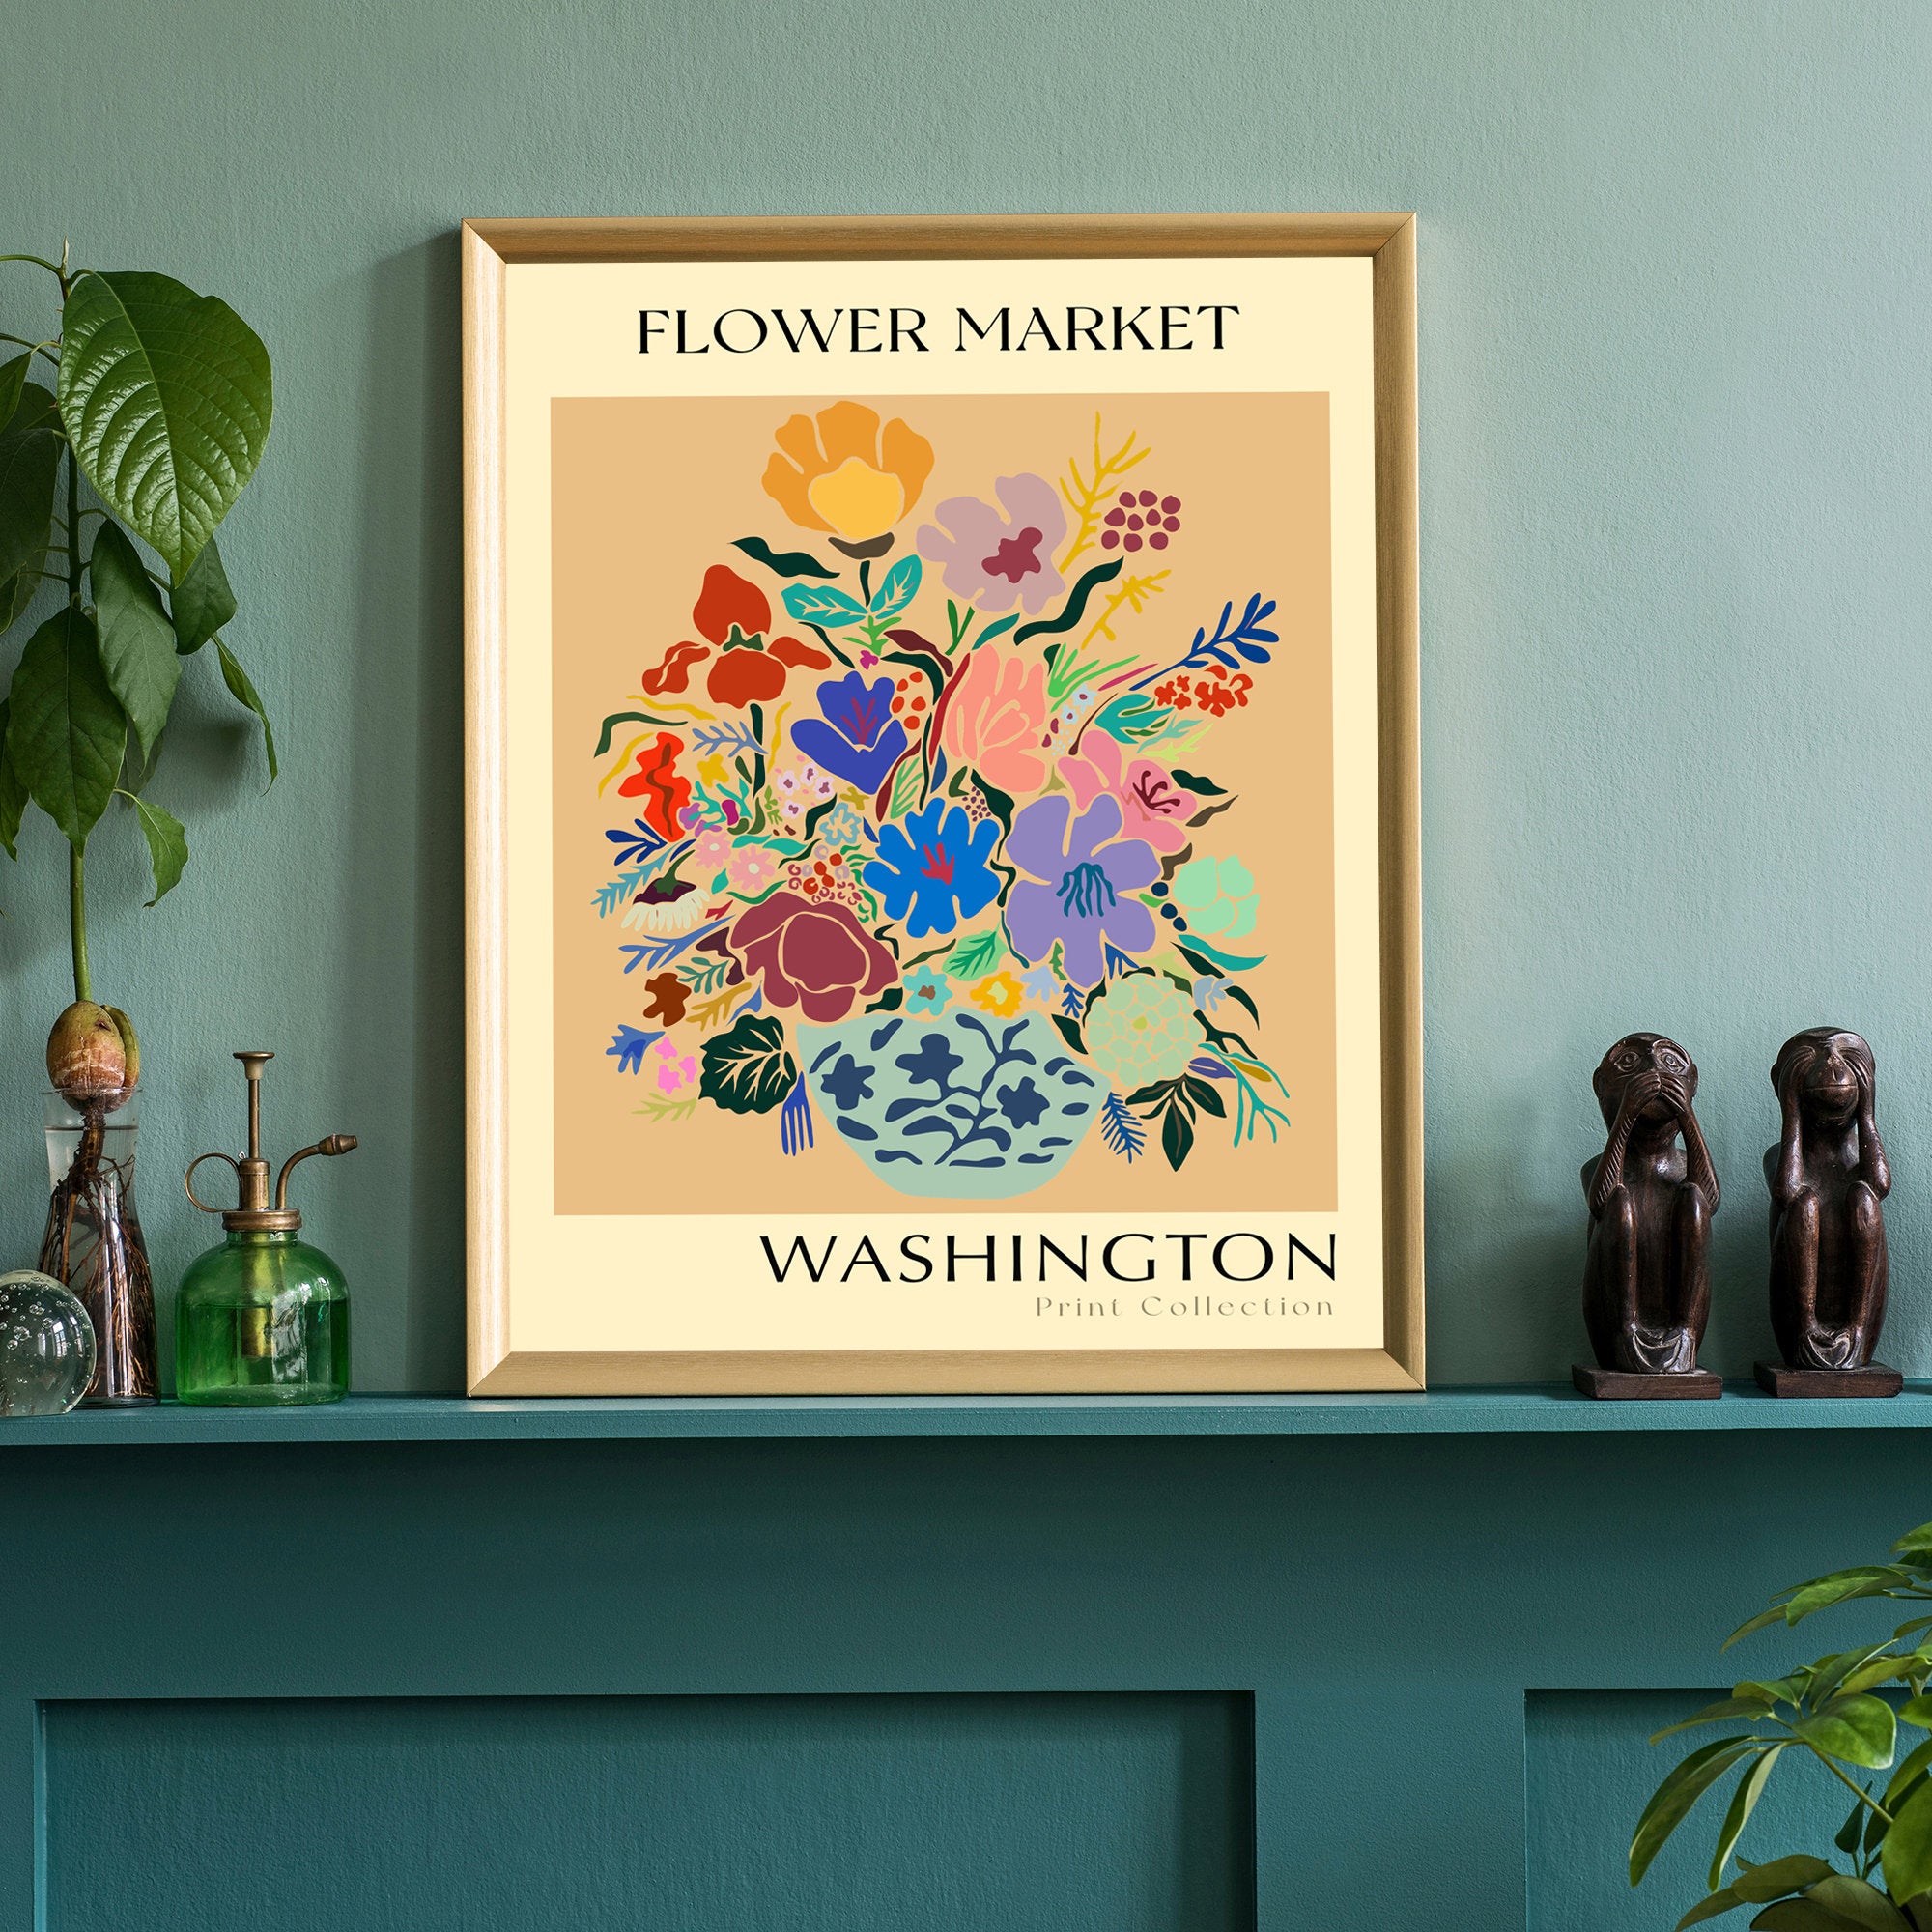 Washington State flower print, USA states poster, Washington flower market poster, Botanical poster, Nature poster artwork, Floral wall art